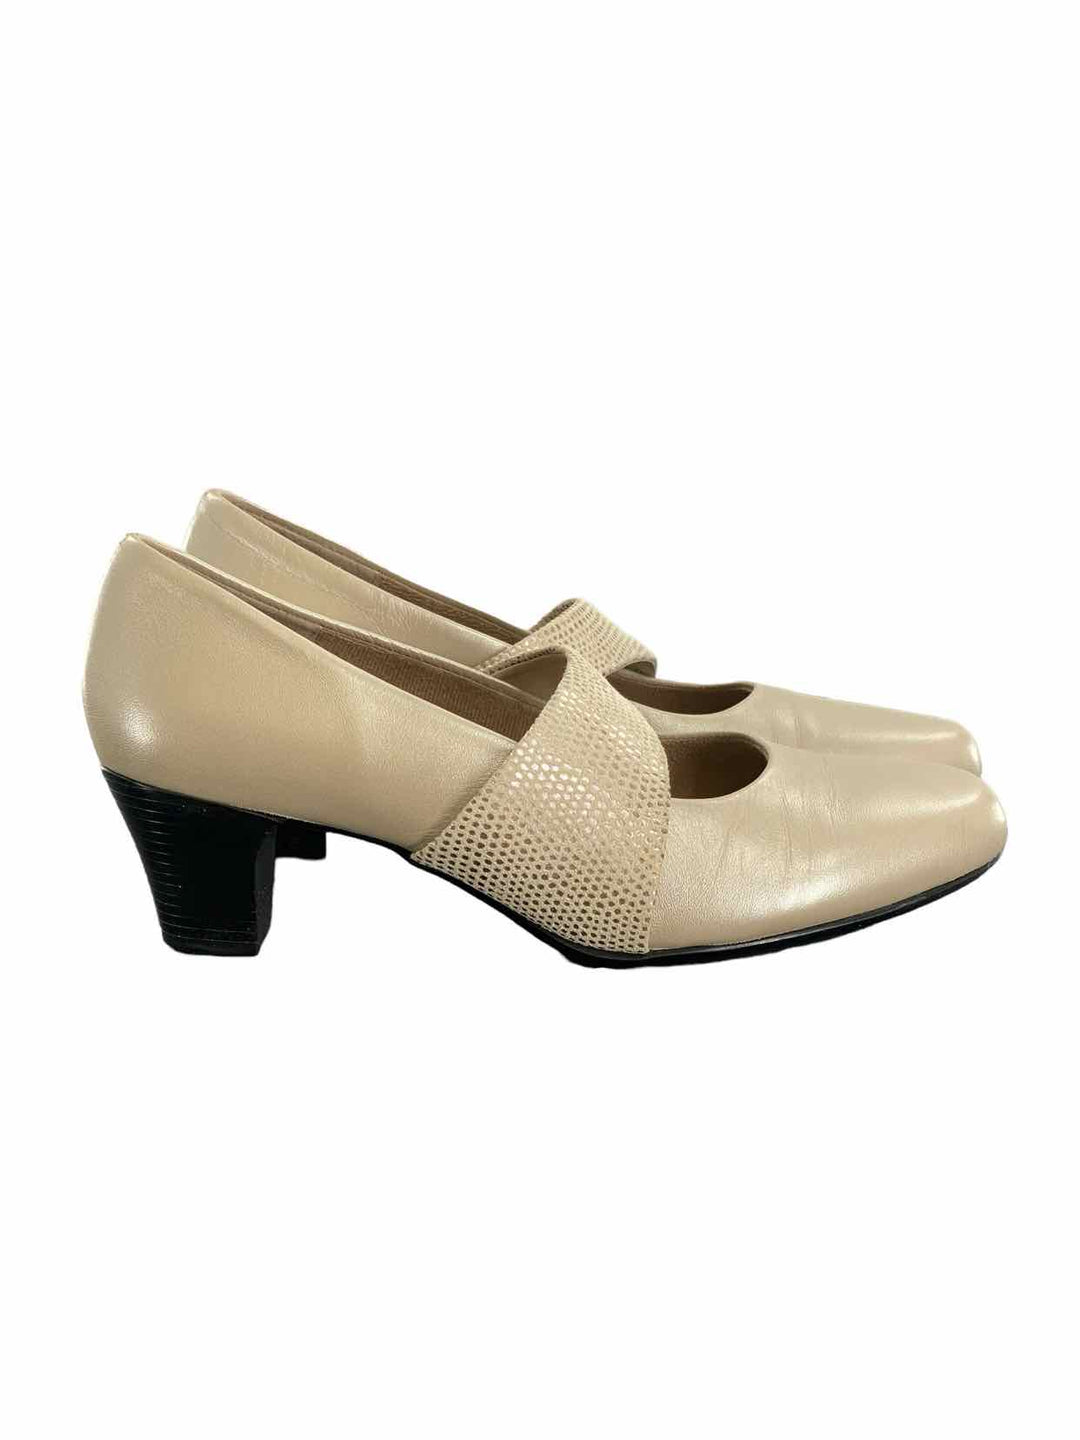 Munro Shoe Size 8 Cream Leather Heels